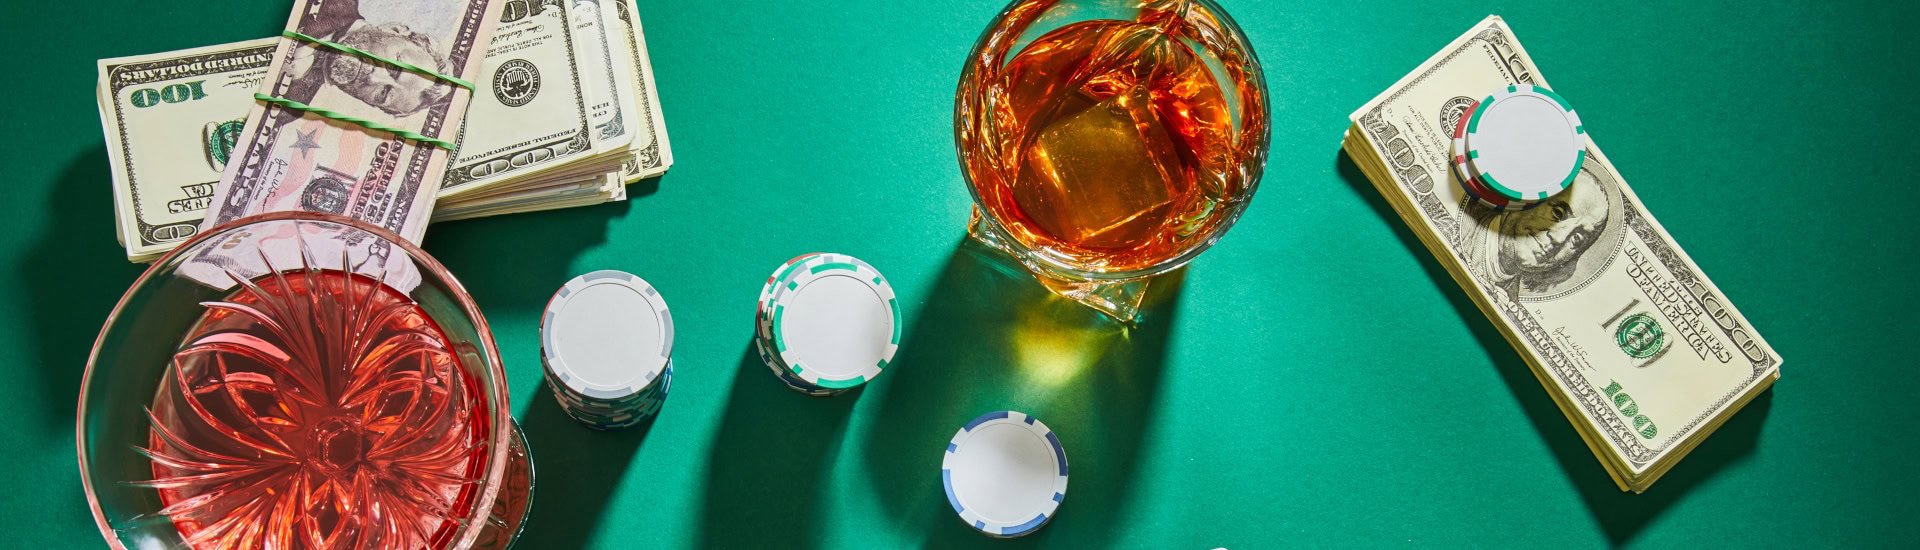 Gambling: Glasses Of Cognac Stacks Of Cash And Casino Chips